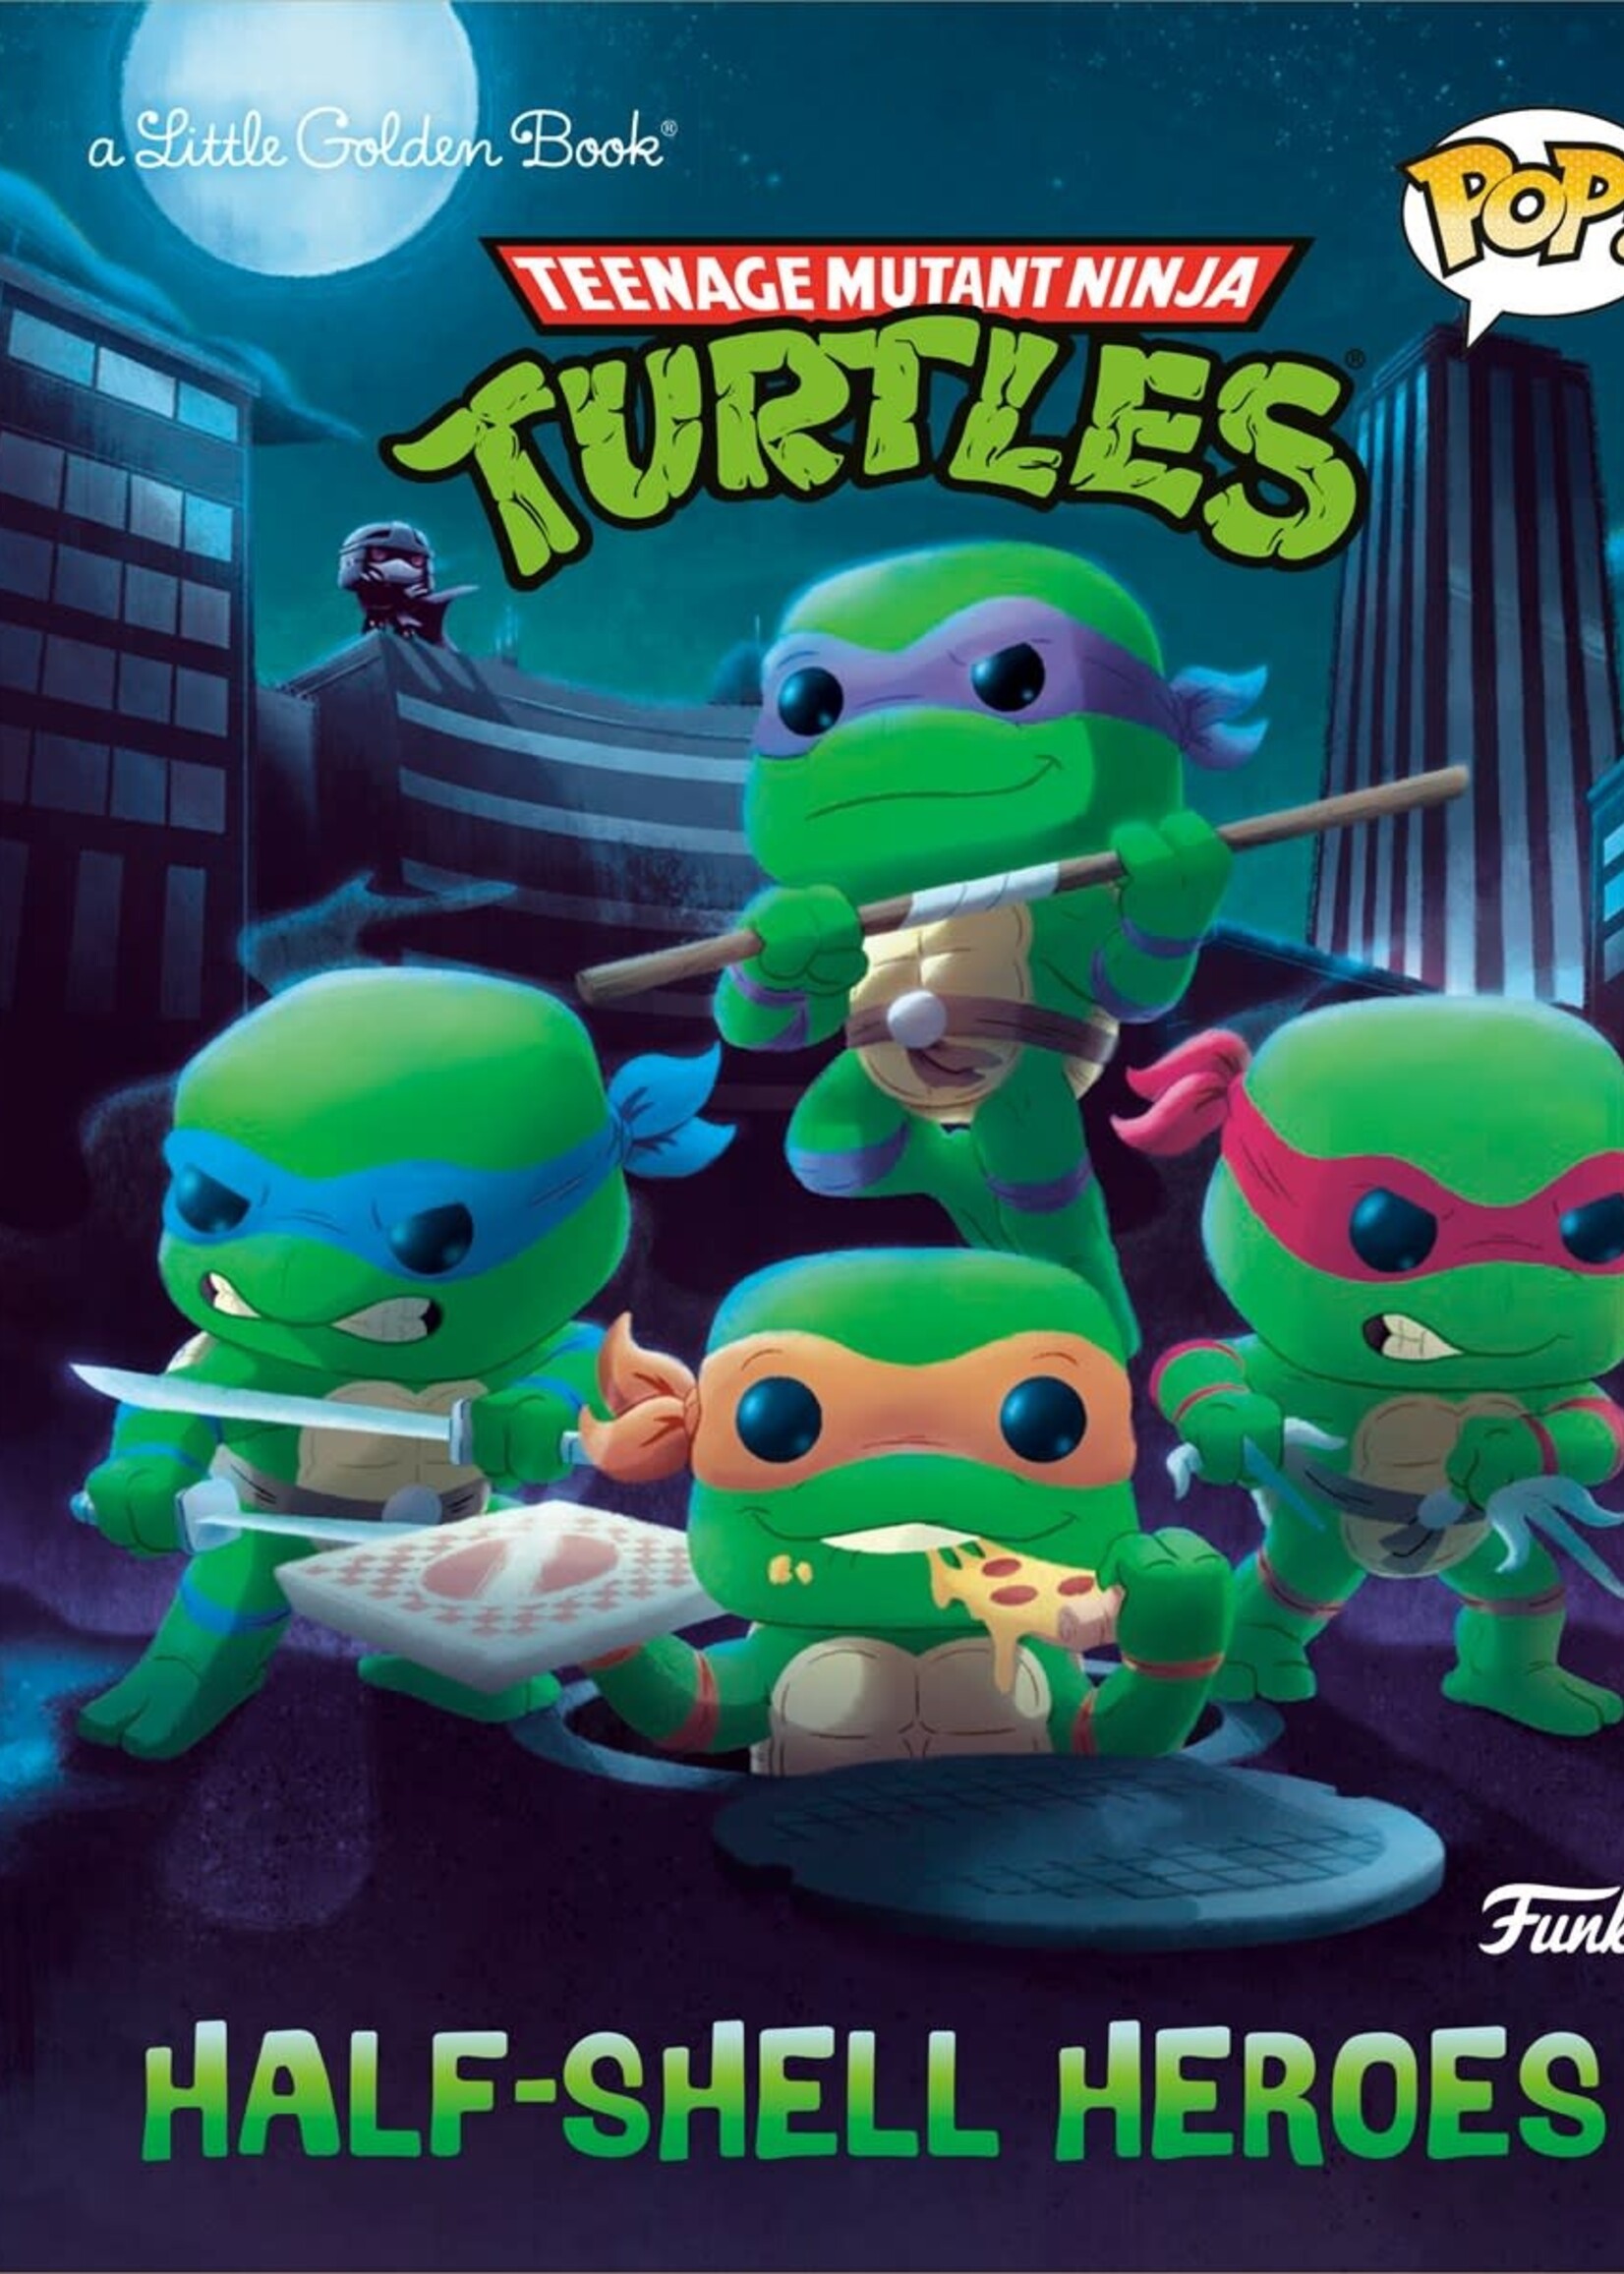 https://cdn.shoplightspeed.com/shops/644462/files/56001382/1652x2313x1/lgb-teenage-mutant-ninja-turtles-half-shell-heroes.jpg